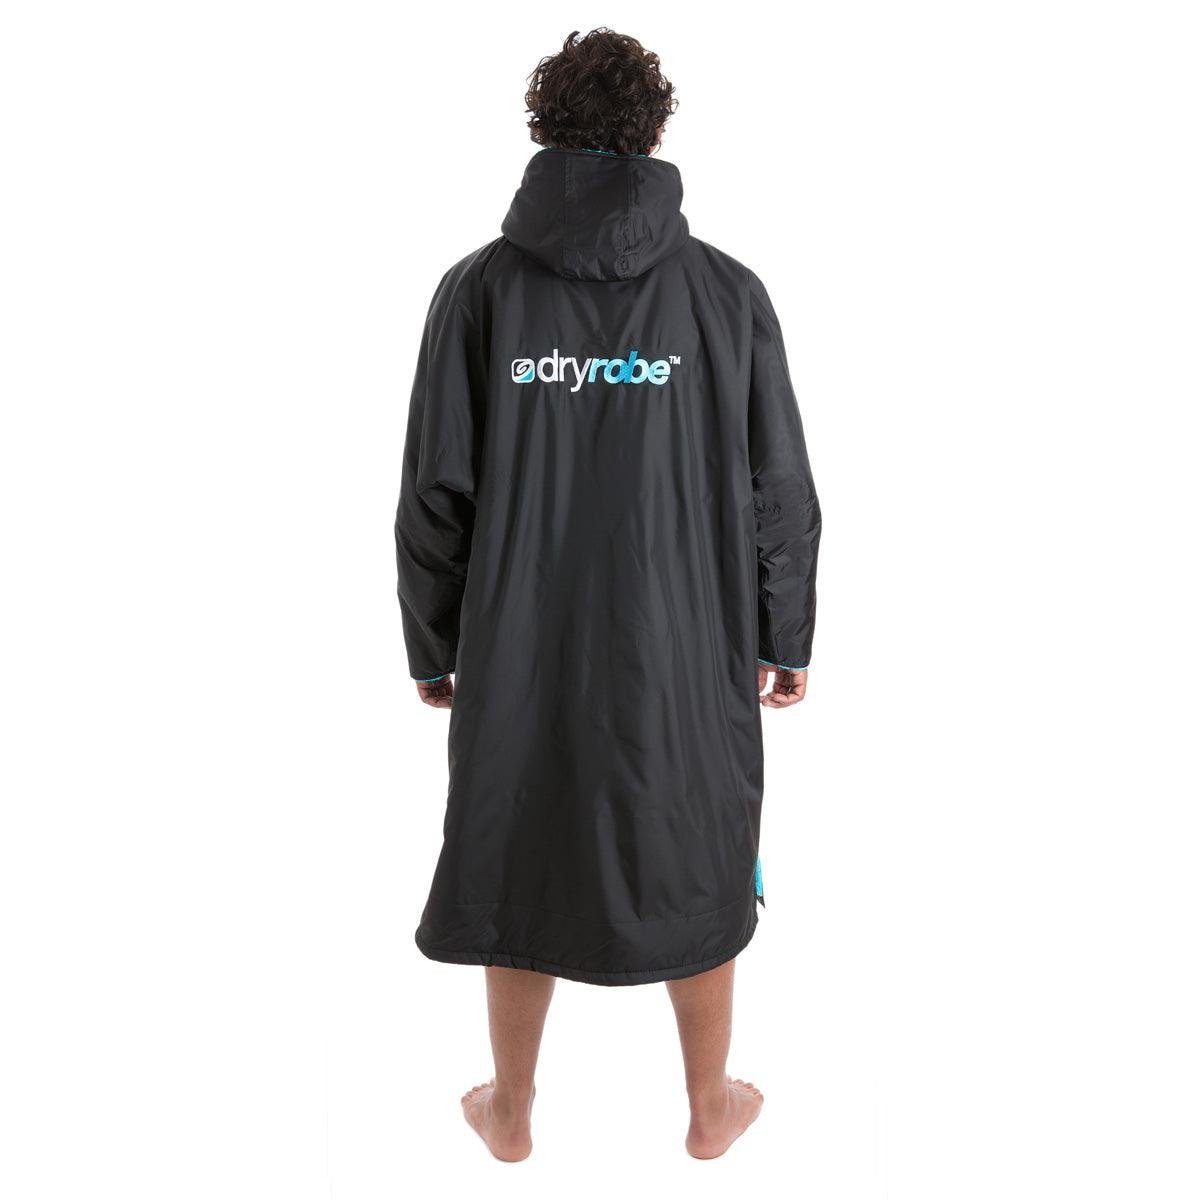 Dryrobe Advance Long Sleeve - Kiteshop.com